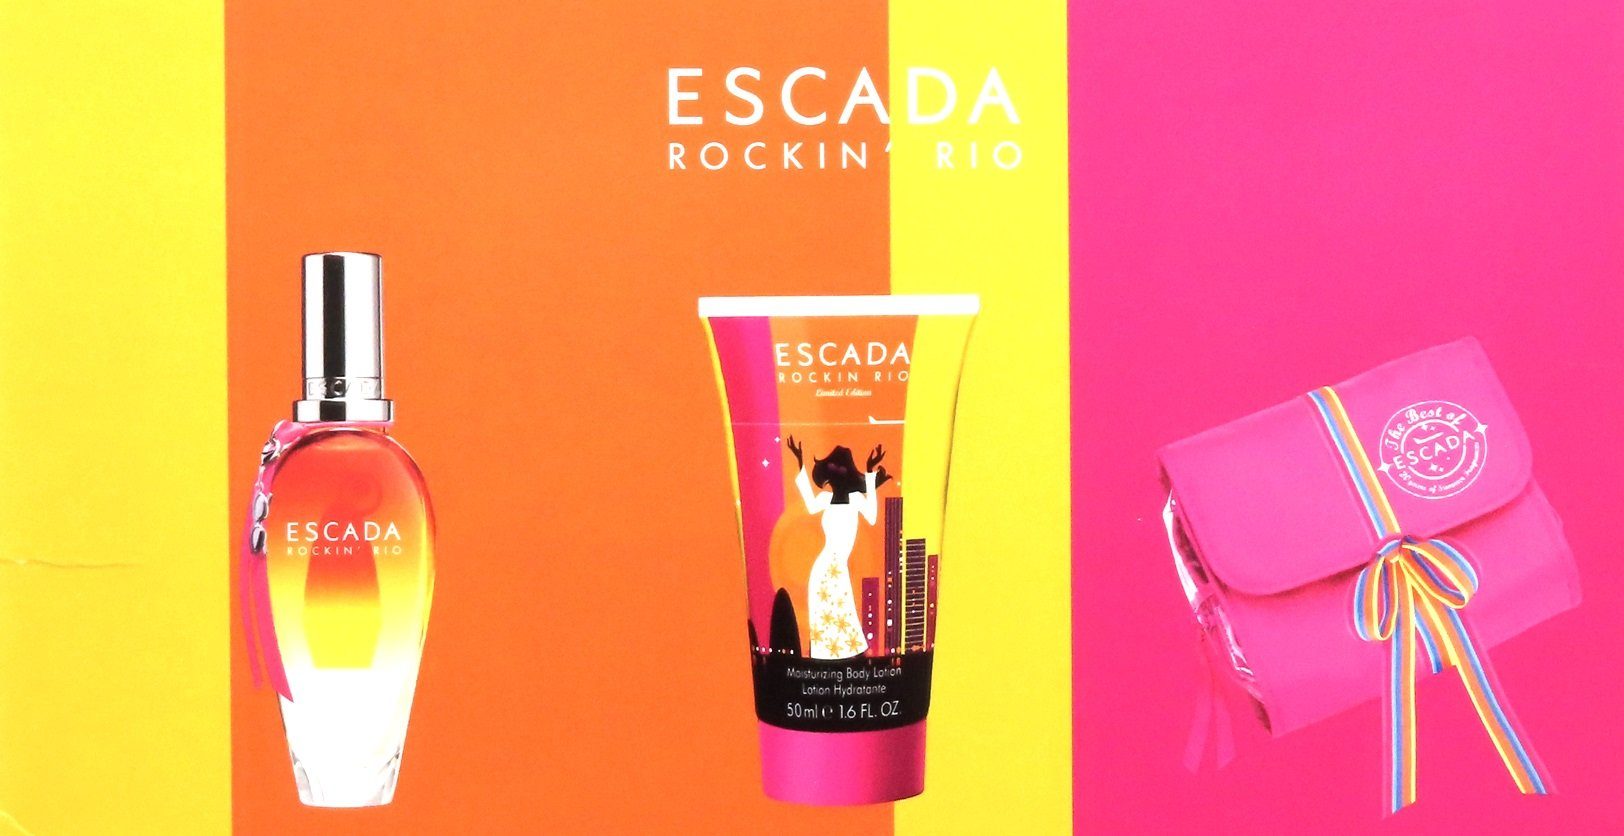 ESCADA 50ml RIO body de Toilette ROCKIN Beauty lotion + 50ml Escada Spray Edt Eau Pouch +